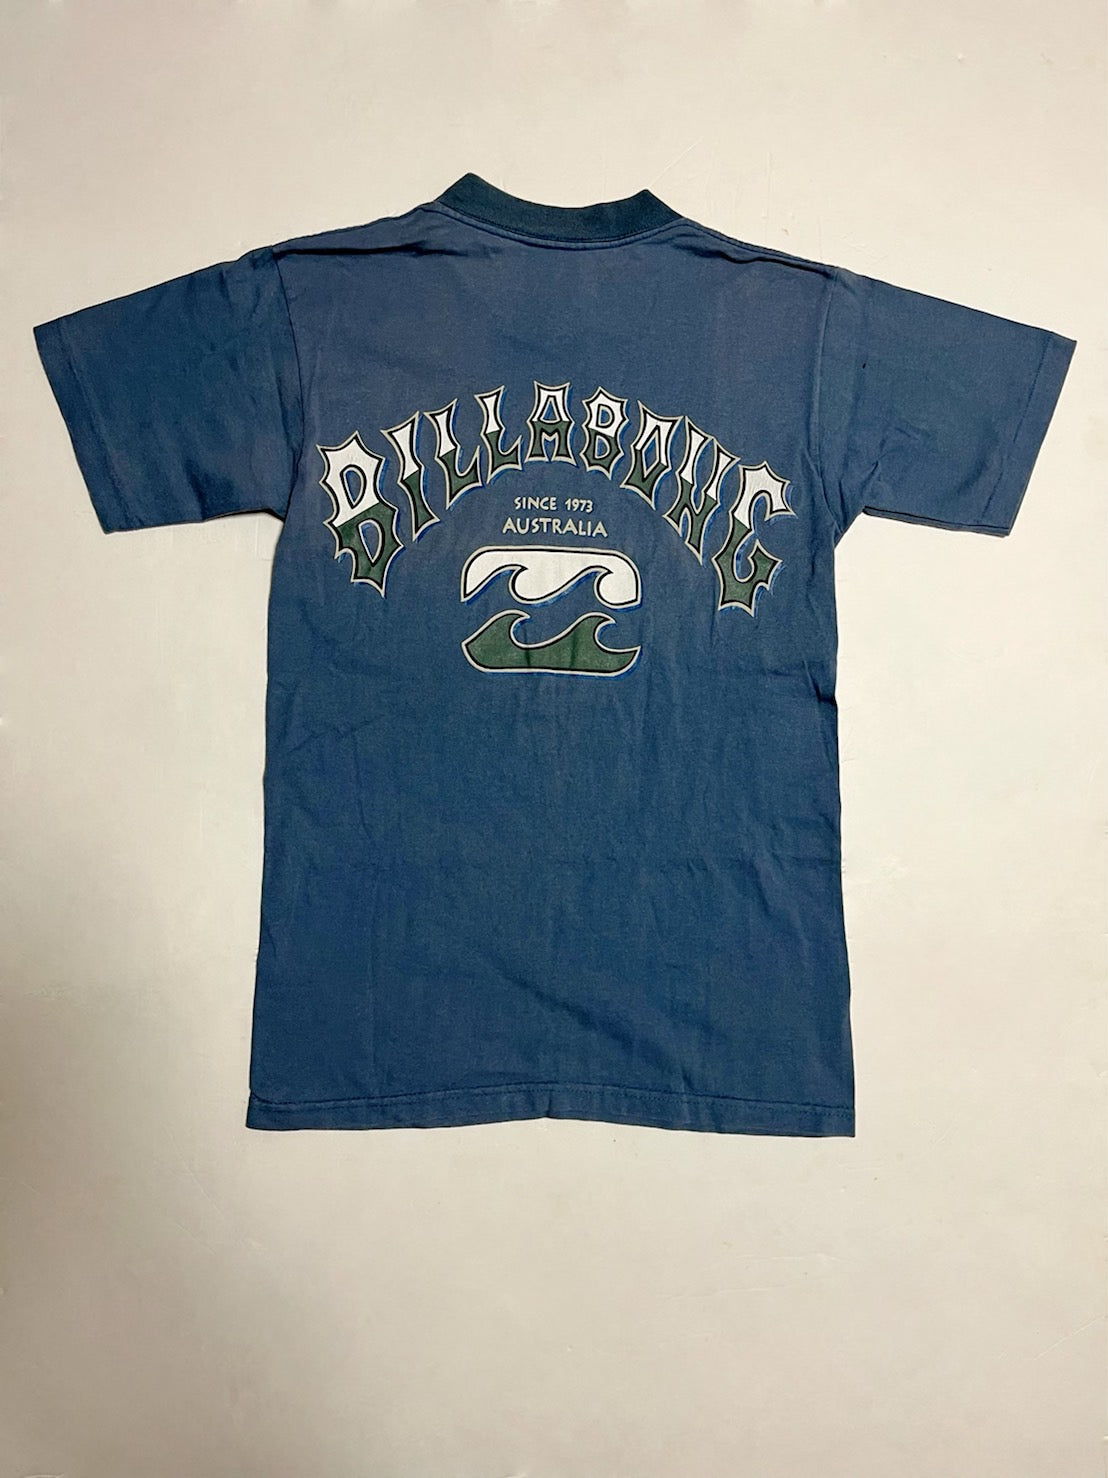 【Billabong】vintage surf 90’s Billabong  big logo T-shirt (men’s S)